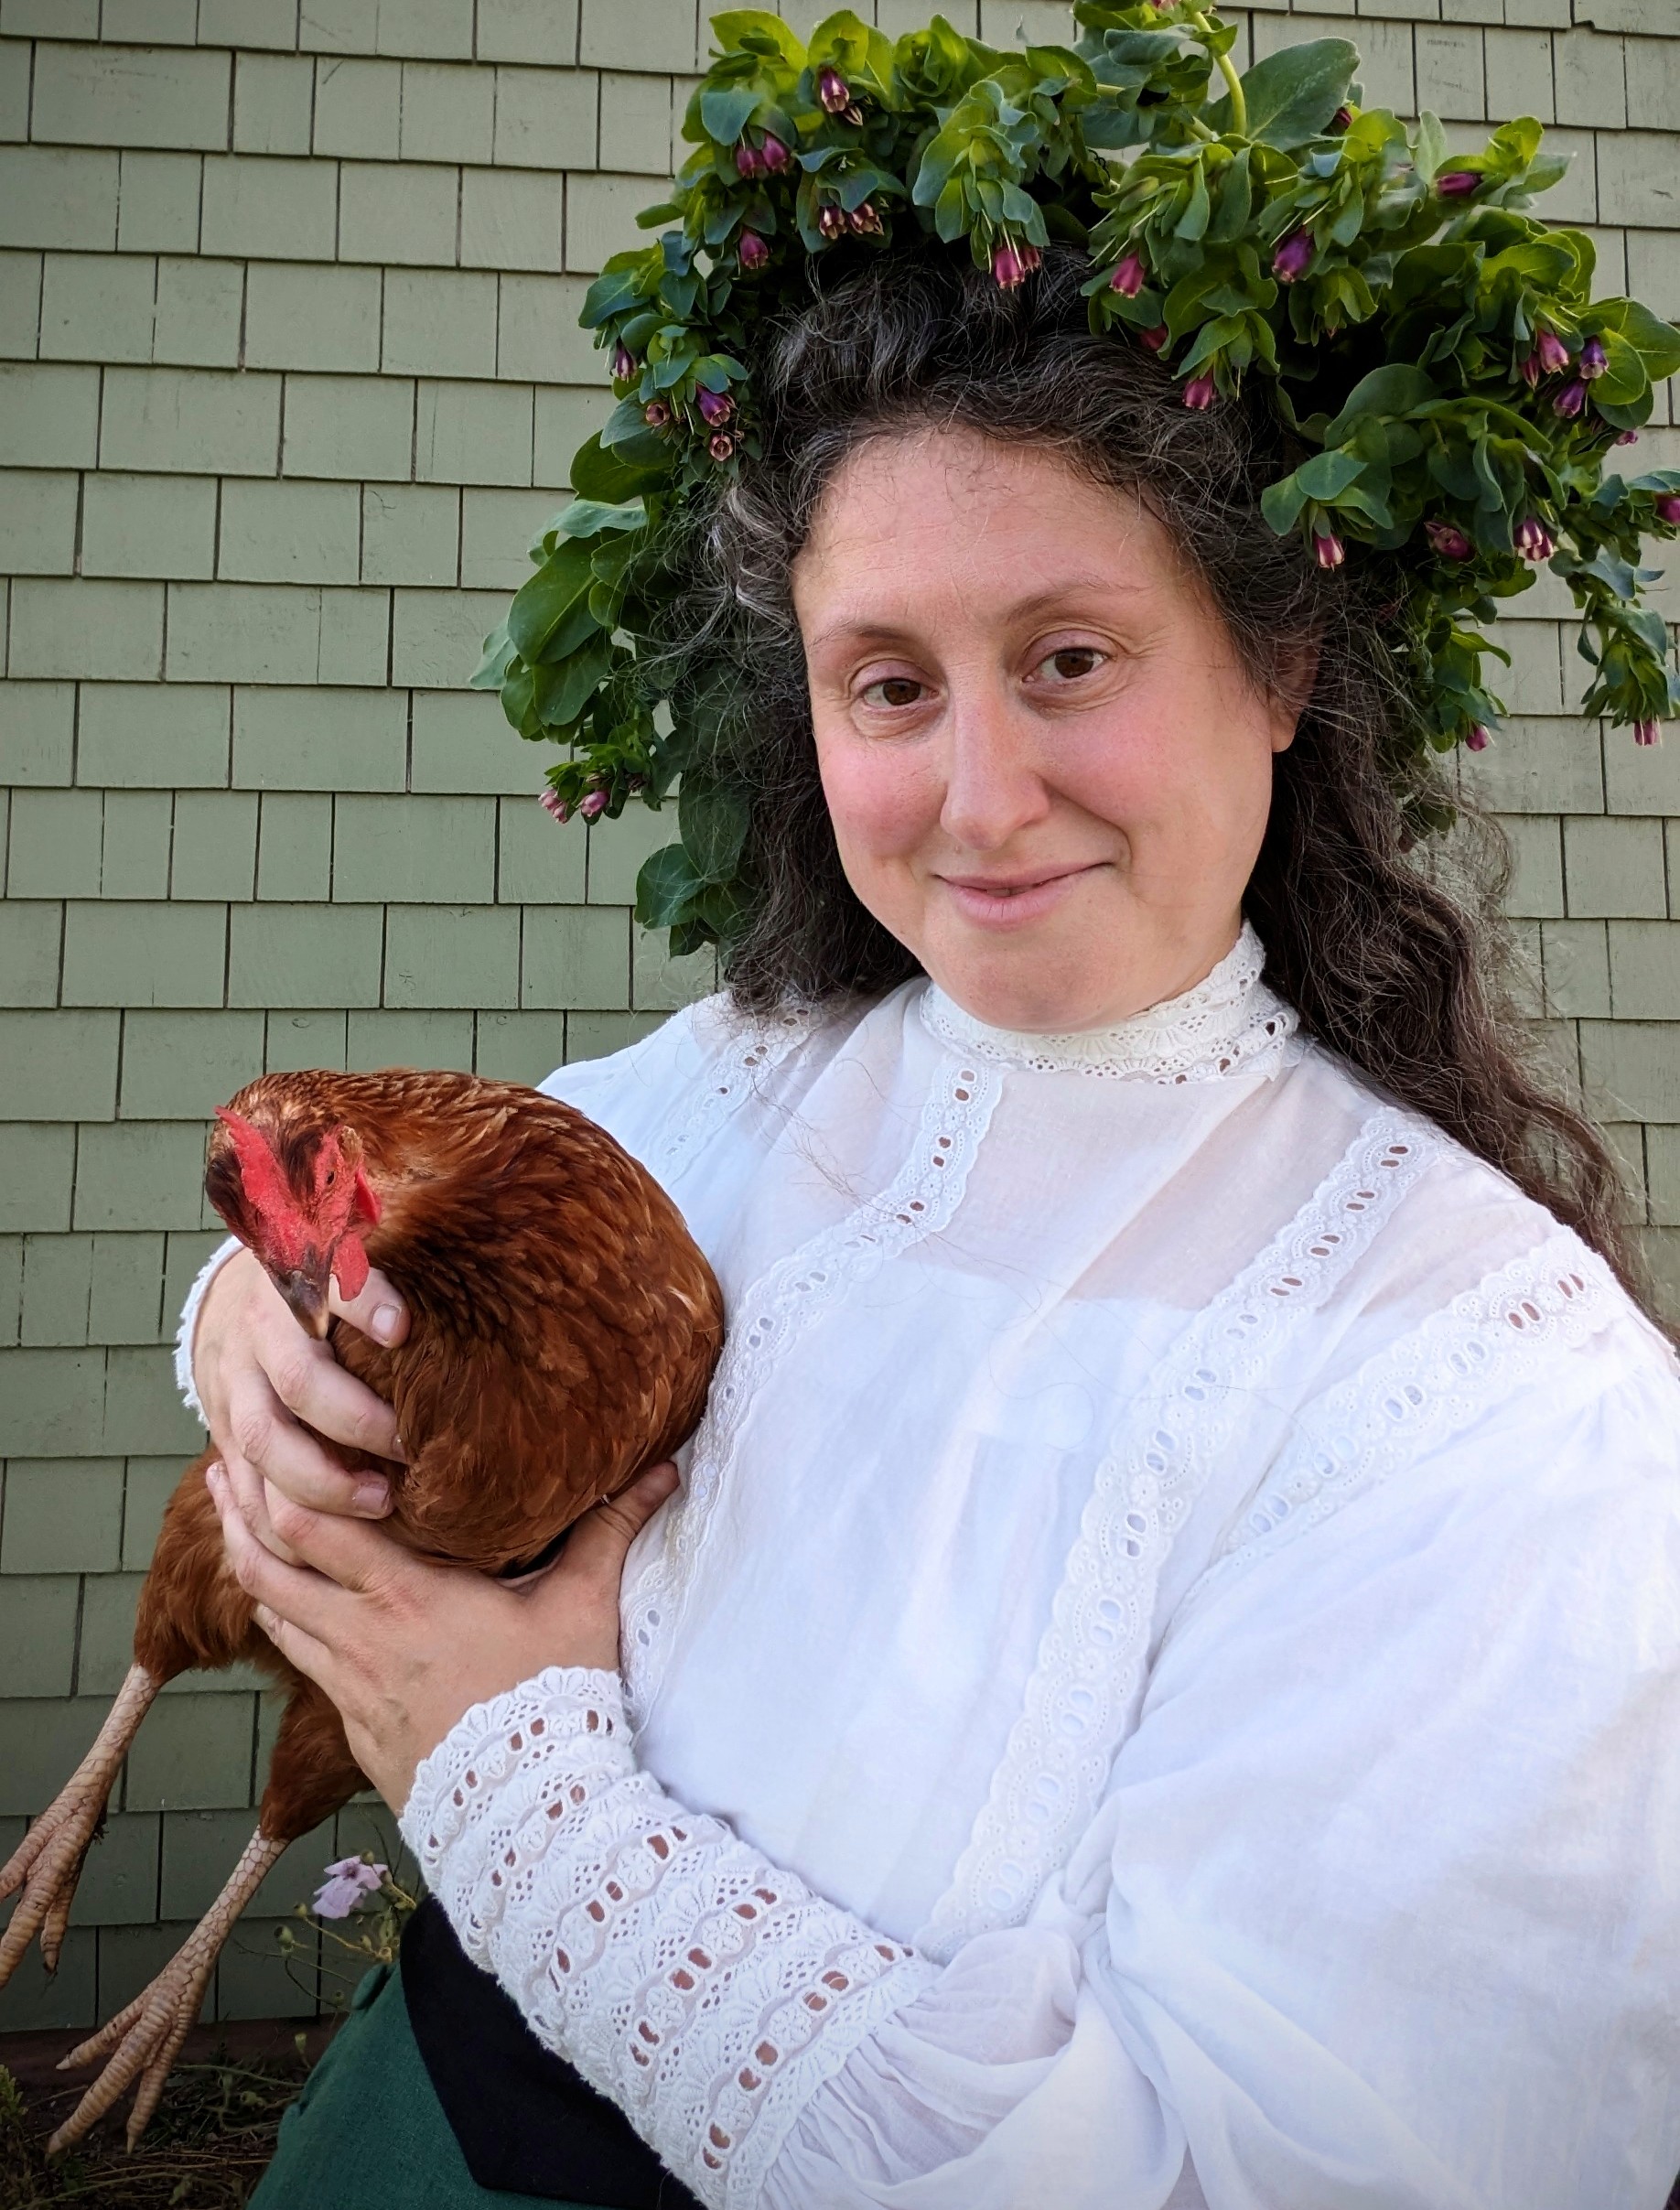 Caitlyn in honeywort crown holding a chicken.